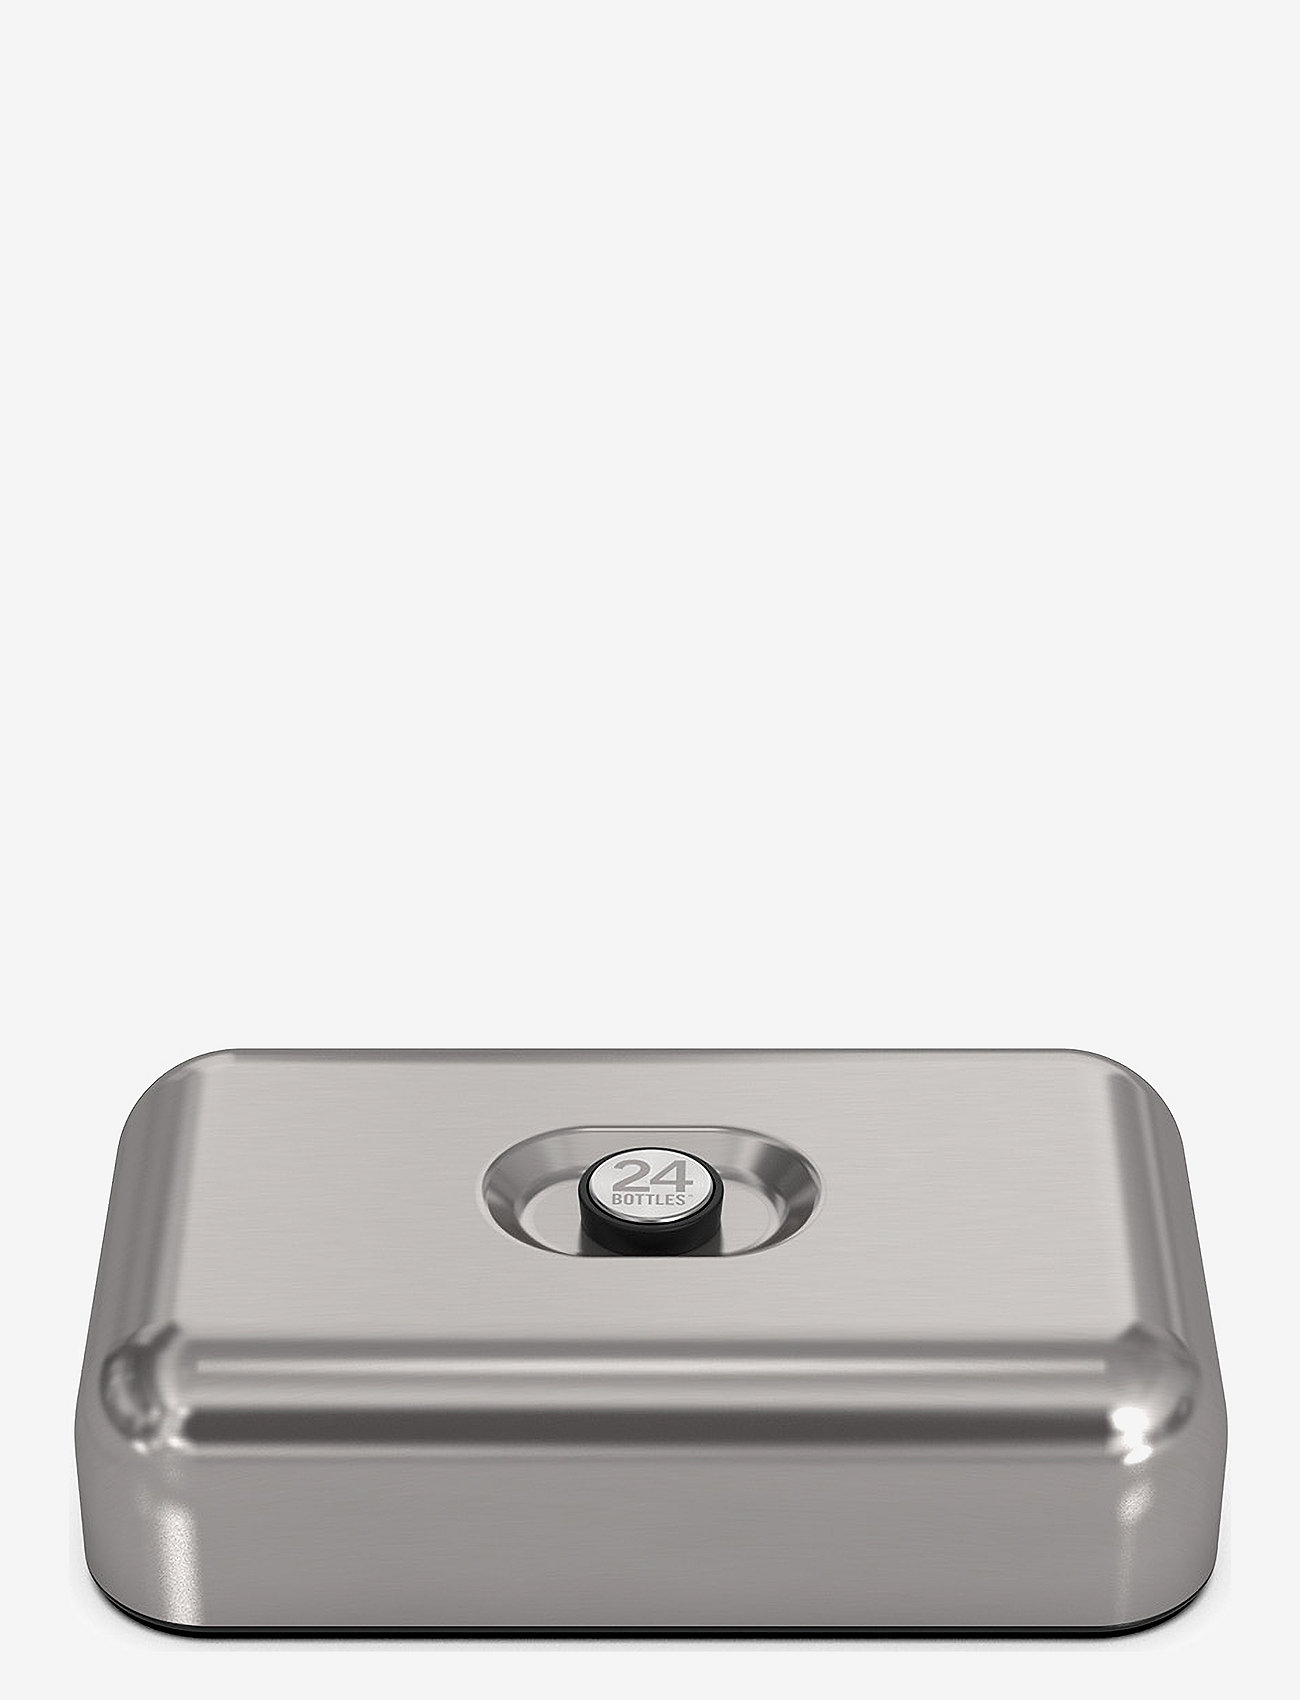 24bottles - Lunch Box - Brushed Steel - home - brushed steel - 0